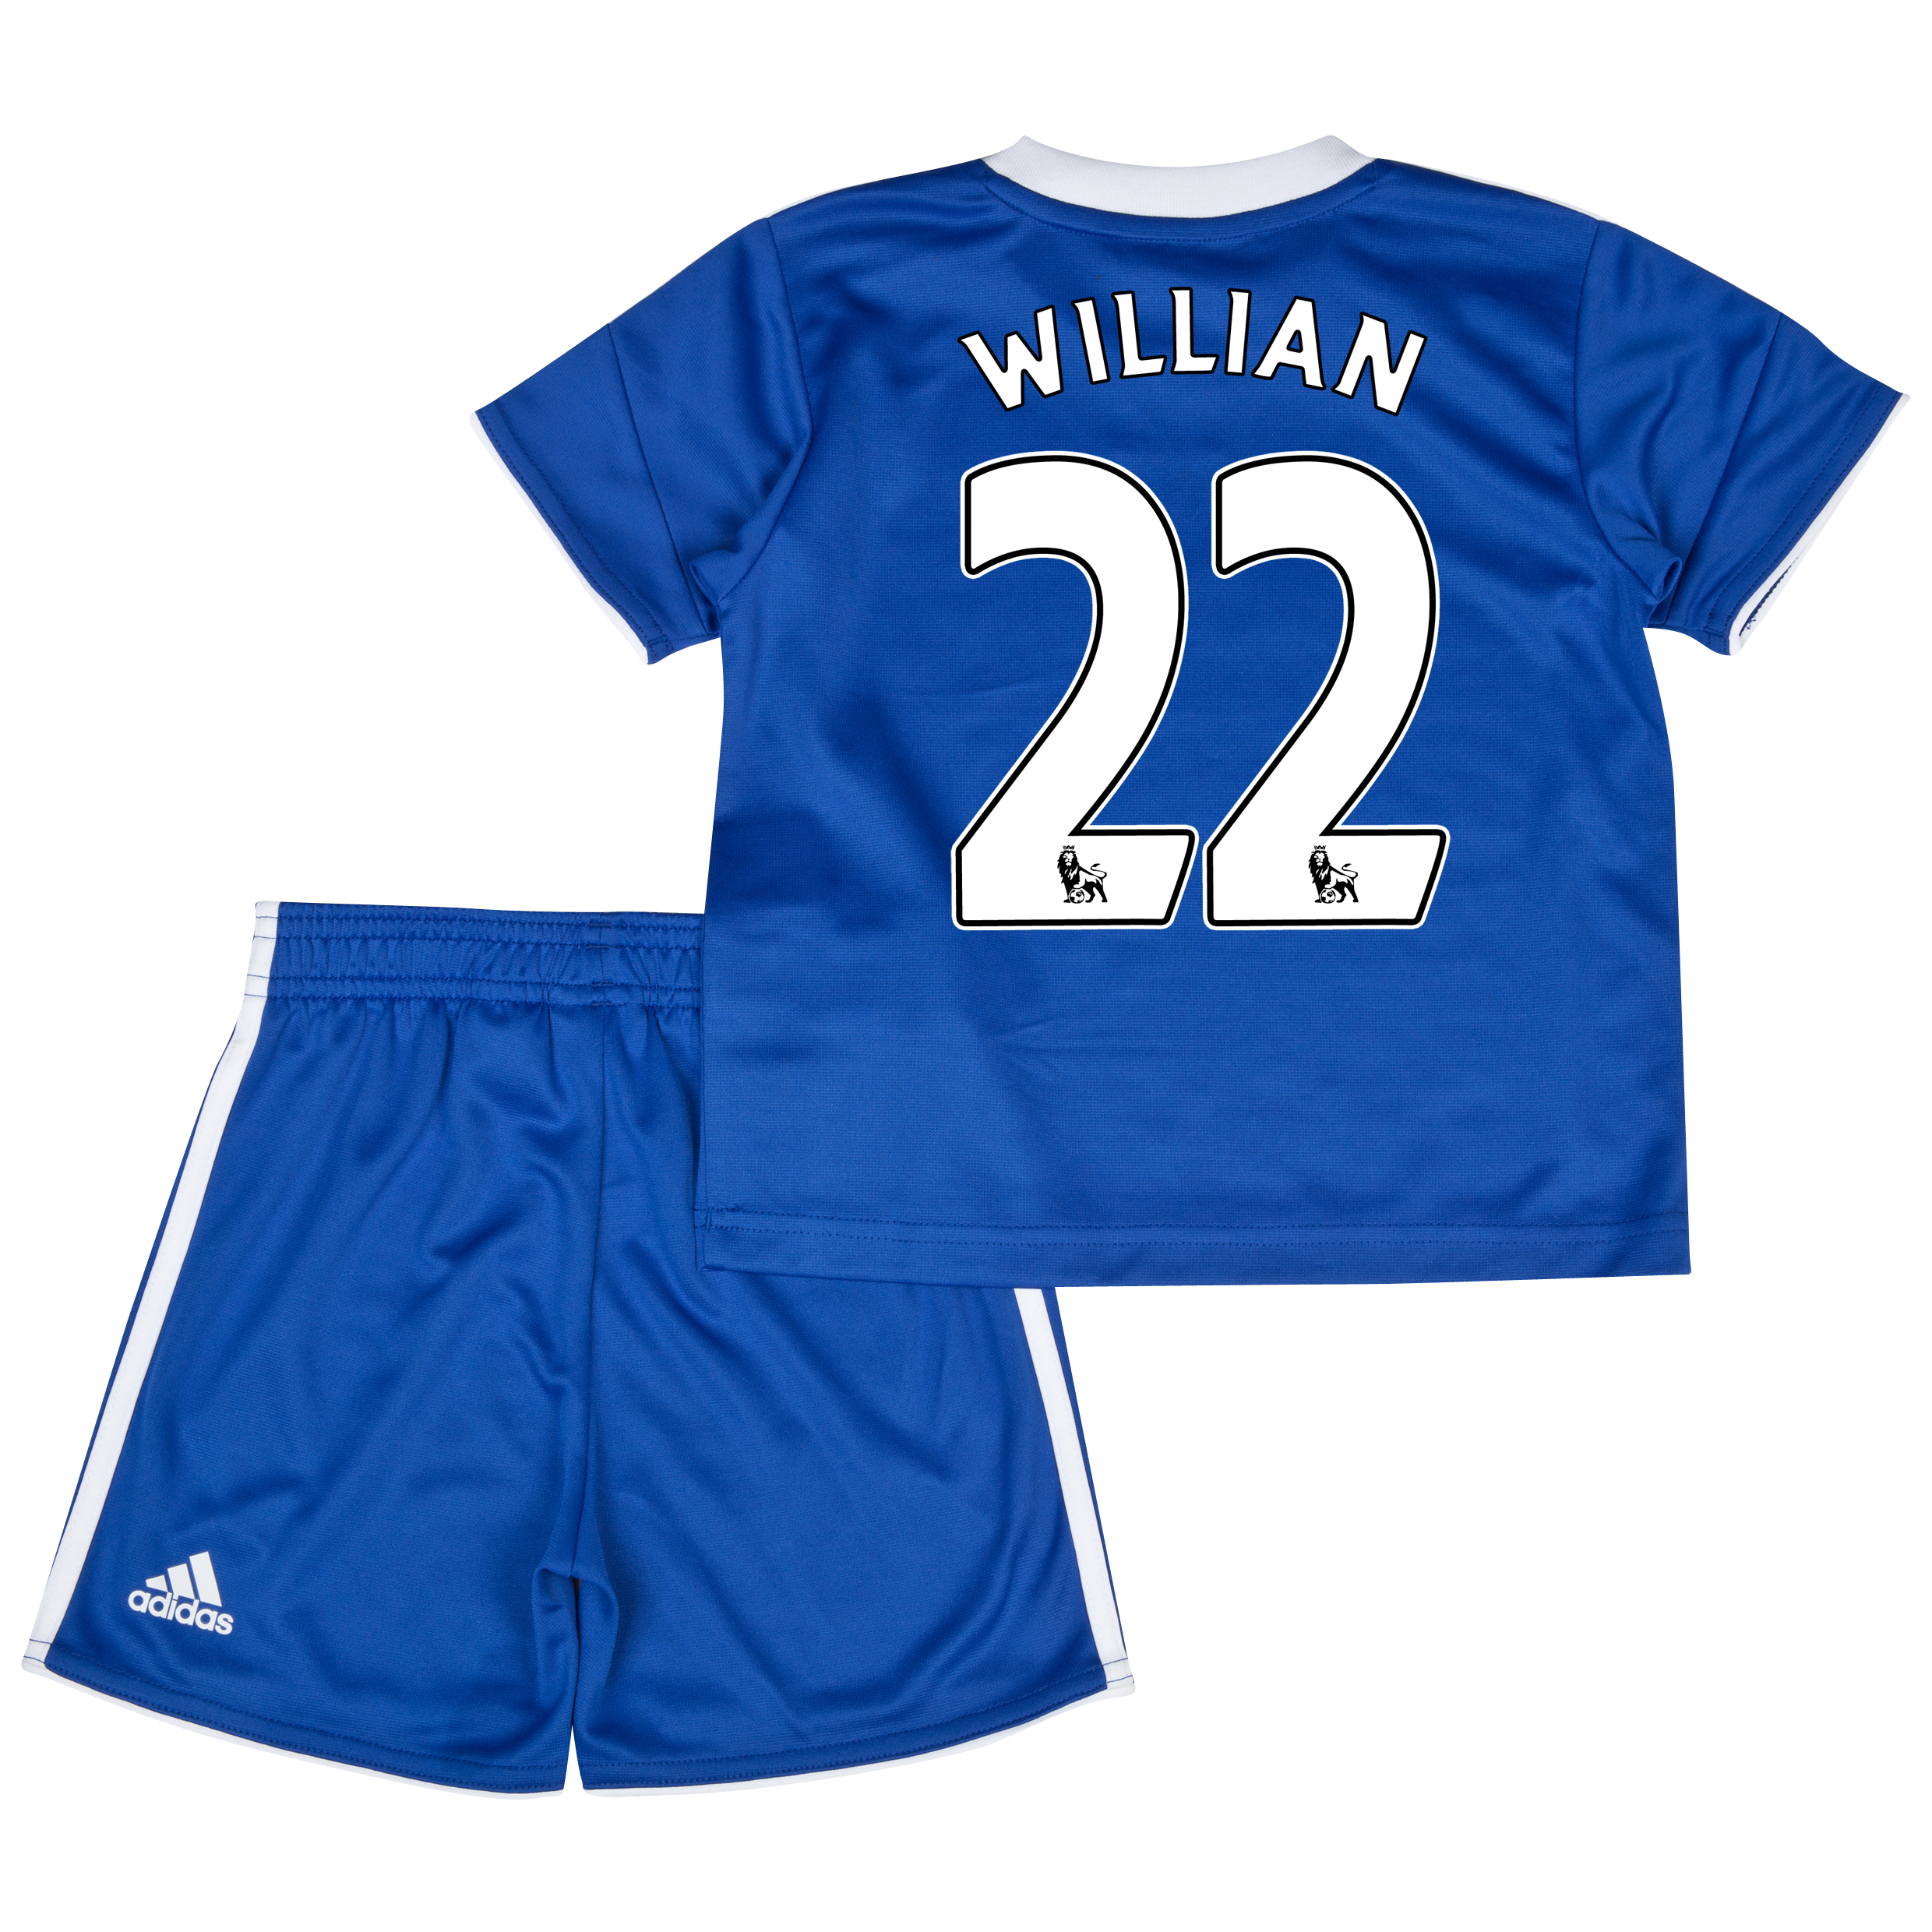 Chelsea Home Mini Kit 2013/14 with Willian 22 printing